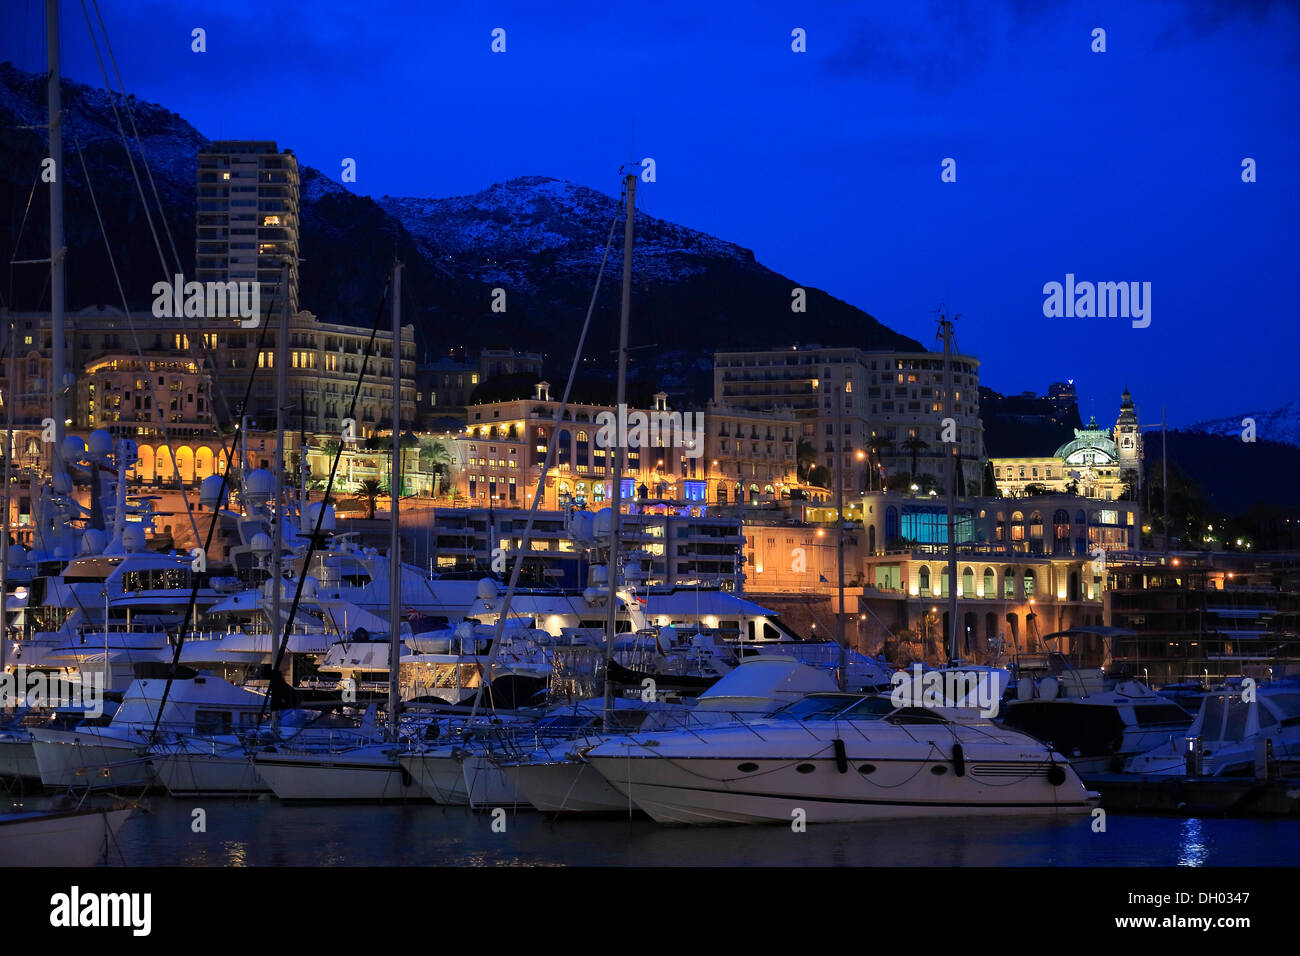 Port Hercule, Monte-Carlo, snow-capped mountains at back, in the evening, dusk, Fürstentum Monaco, Monaco Stock Photo